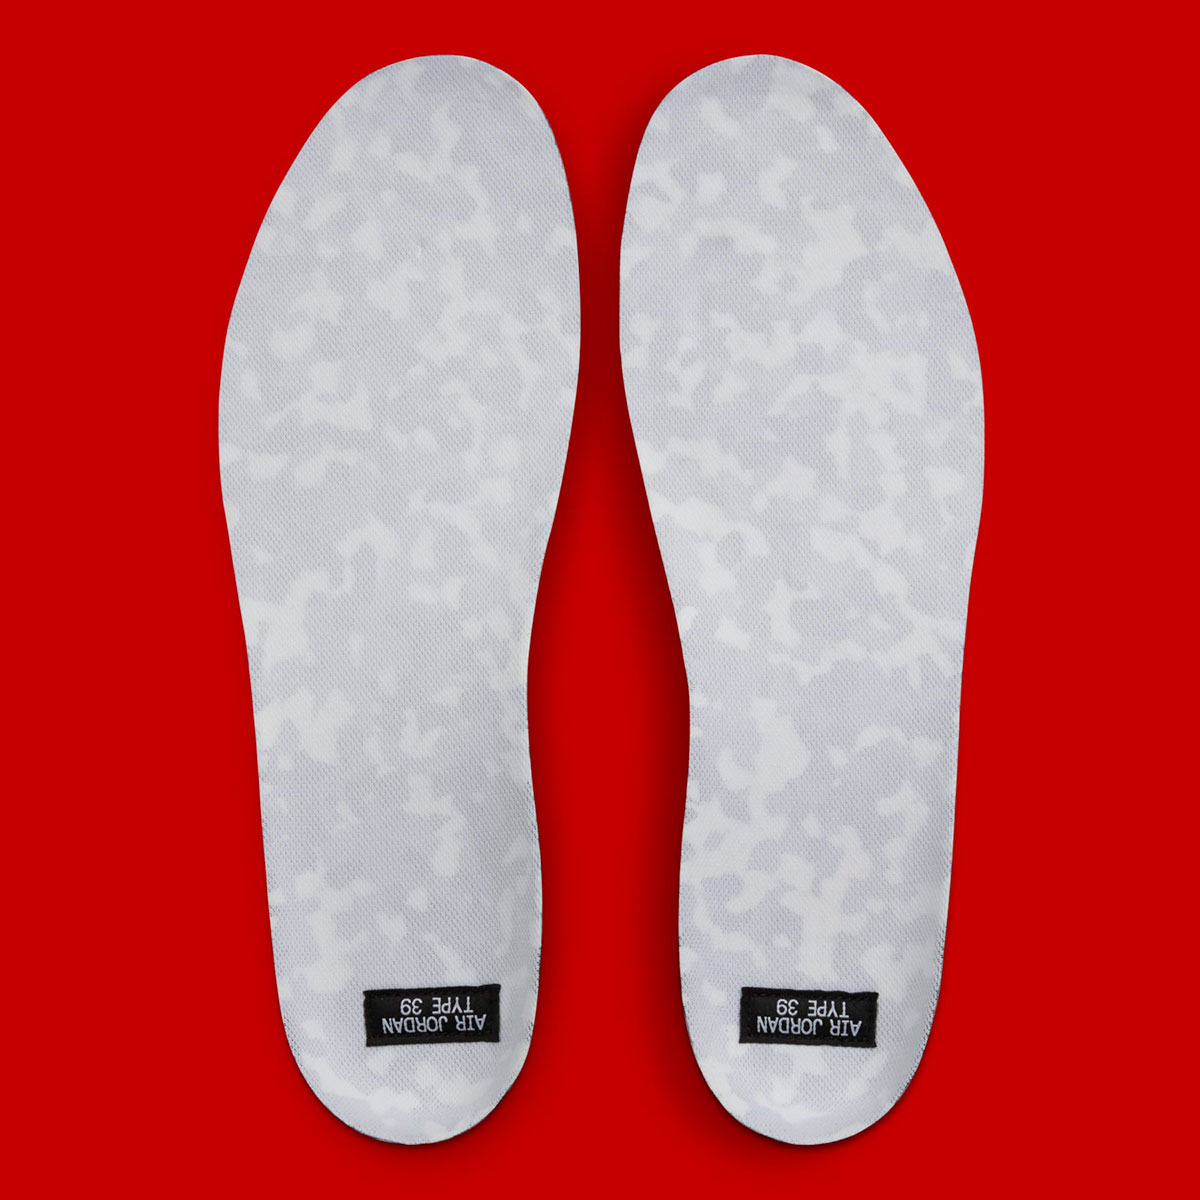 Air Jordan 1 Store List Sol Fq0213 106 Release Date 5